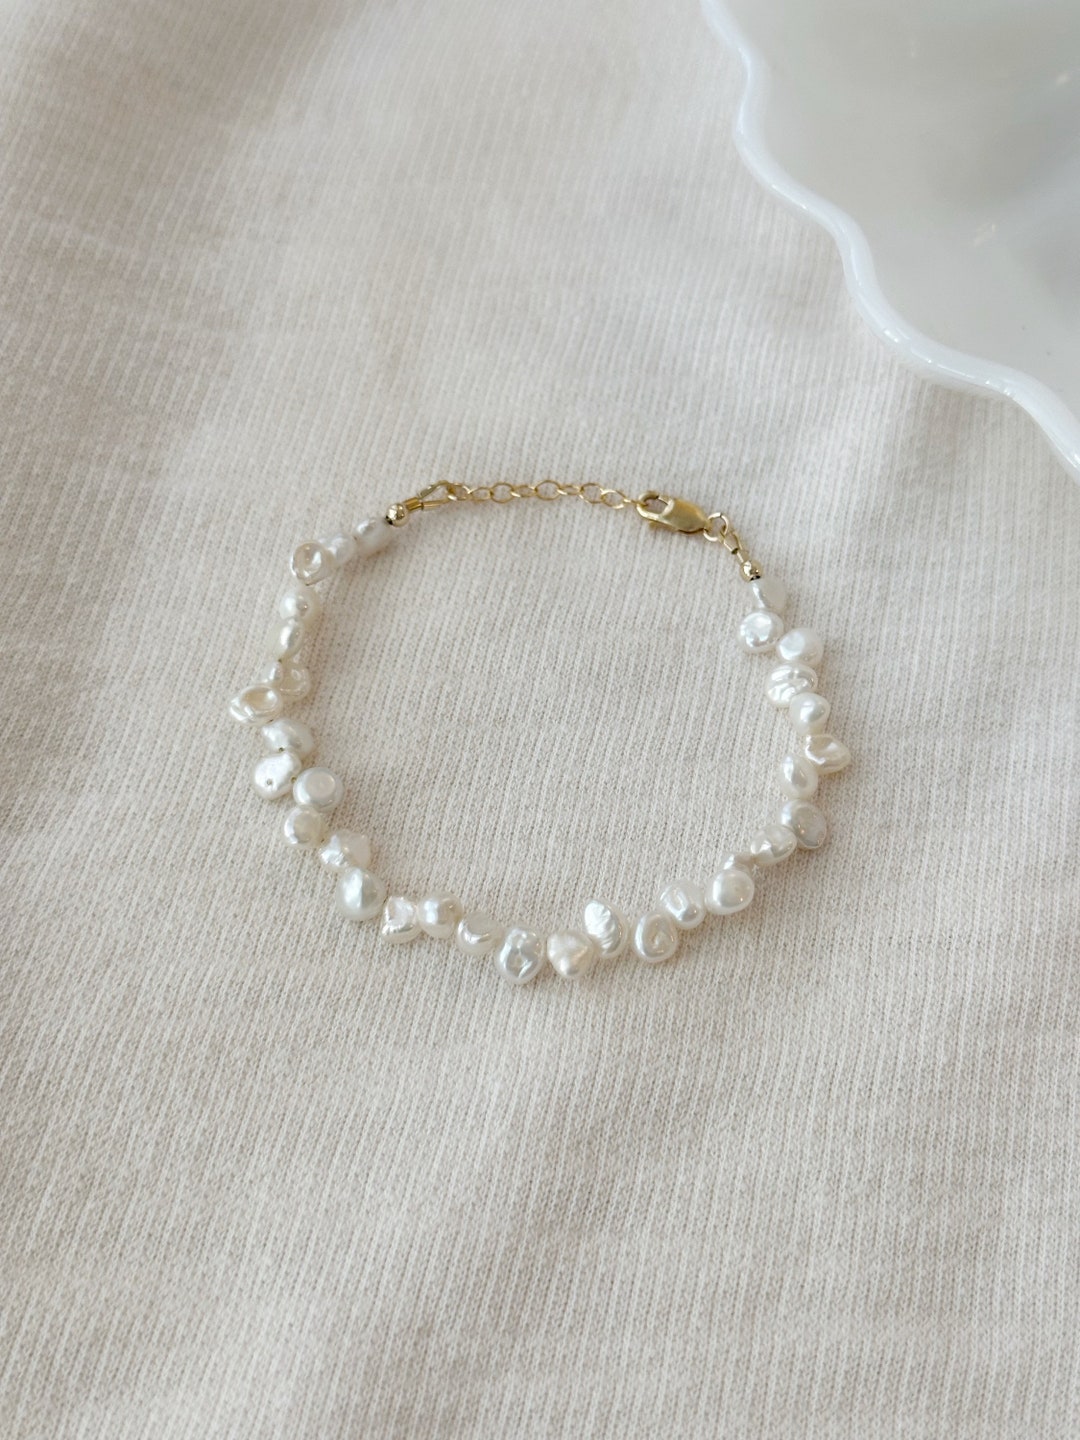 Irregular Pearl Bracelet, 14K Gold Filled Pearl Bracelet, Keishi Pearl ...